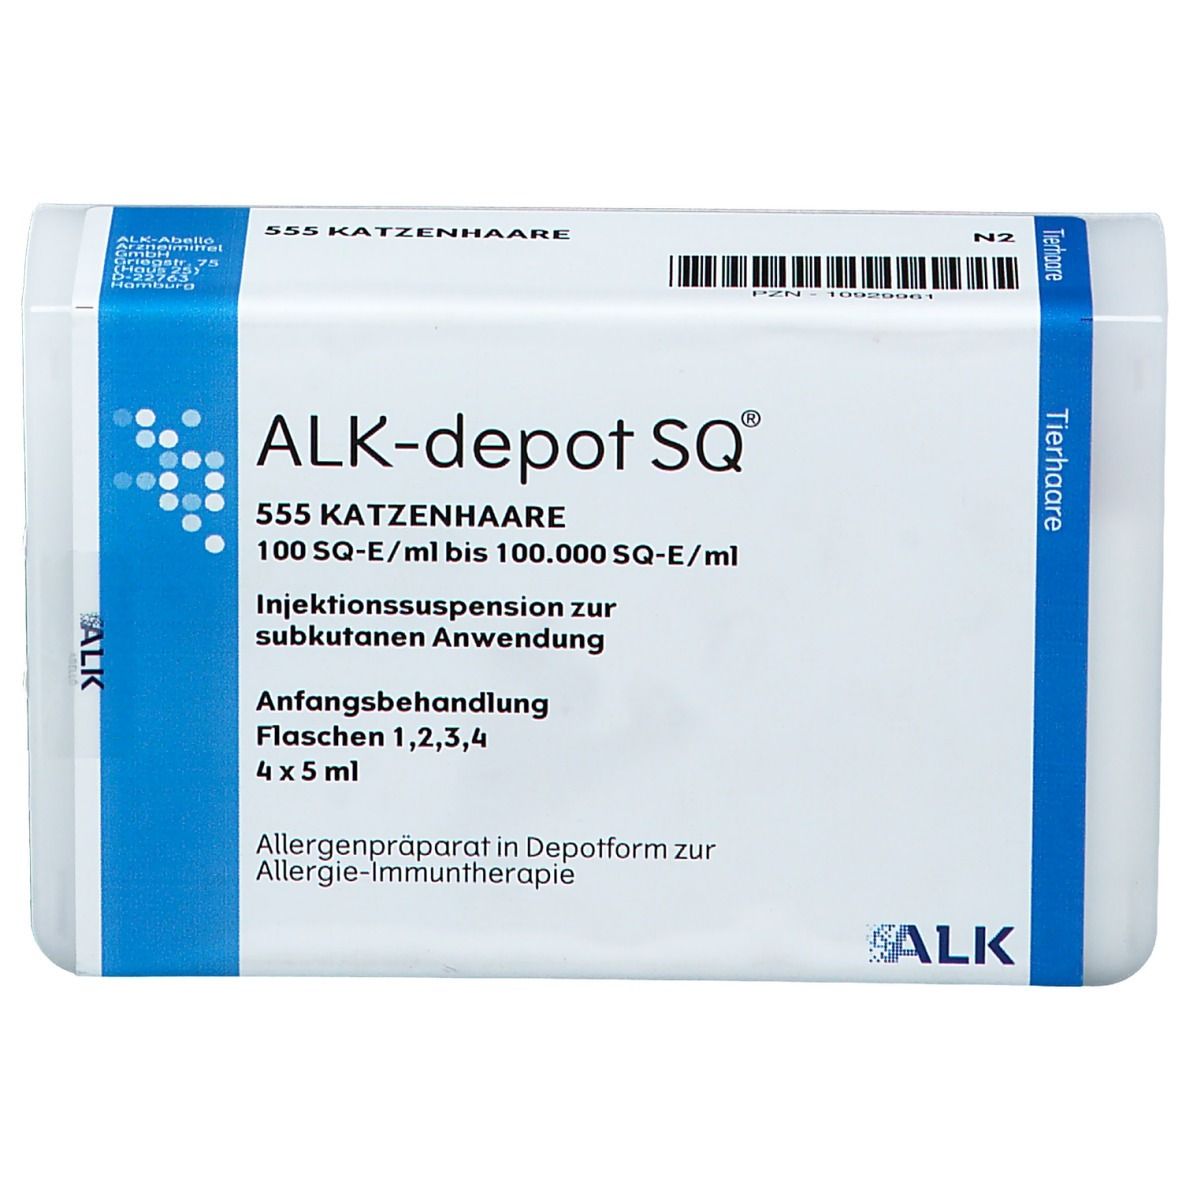 ALK-depot SQ® 555 Katzenhaare AF